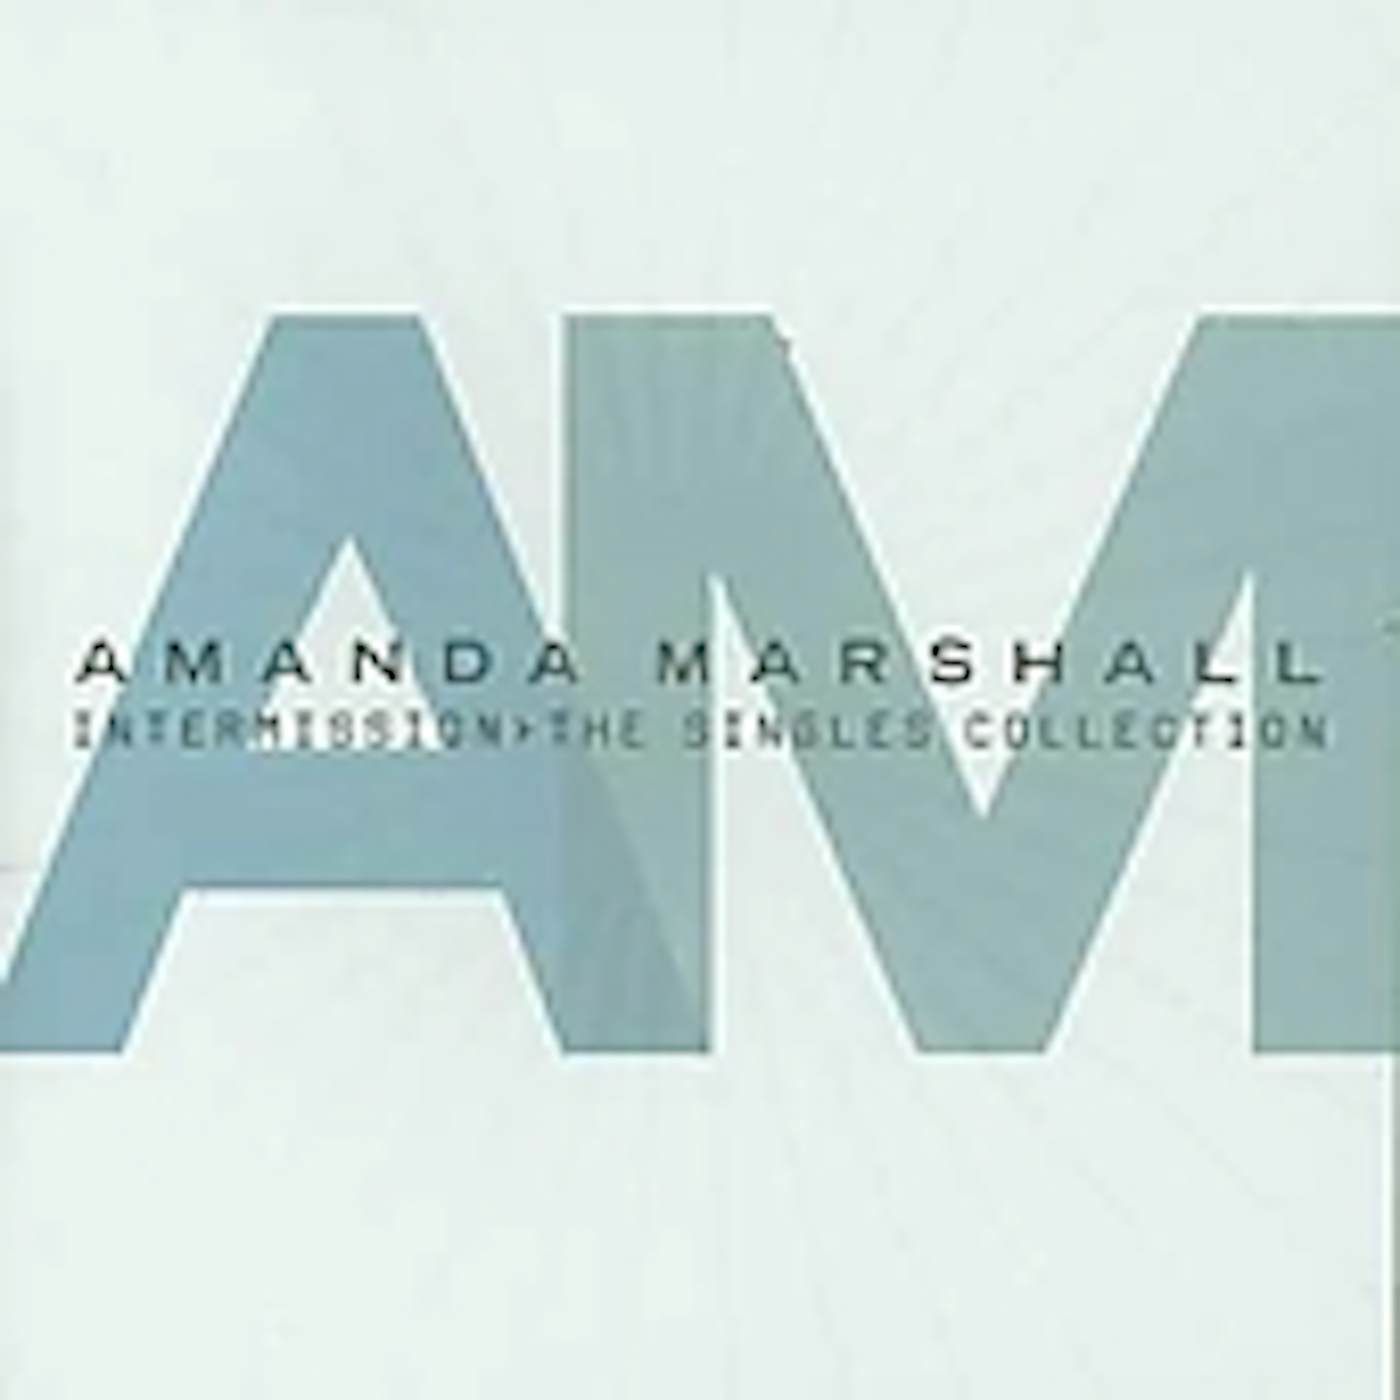 Amanda Marshall INTERMISSION CD